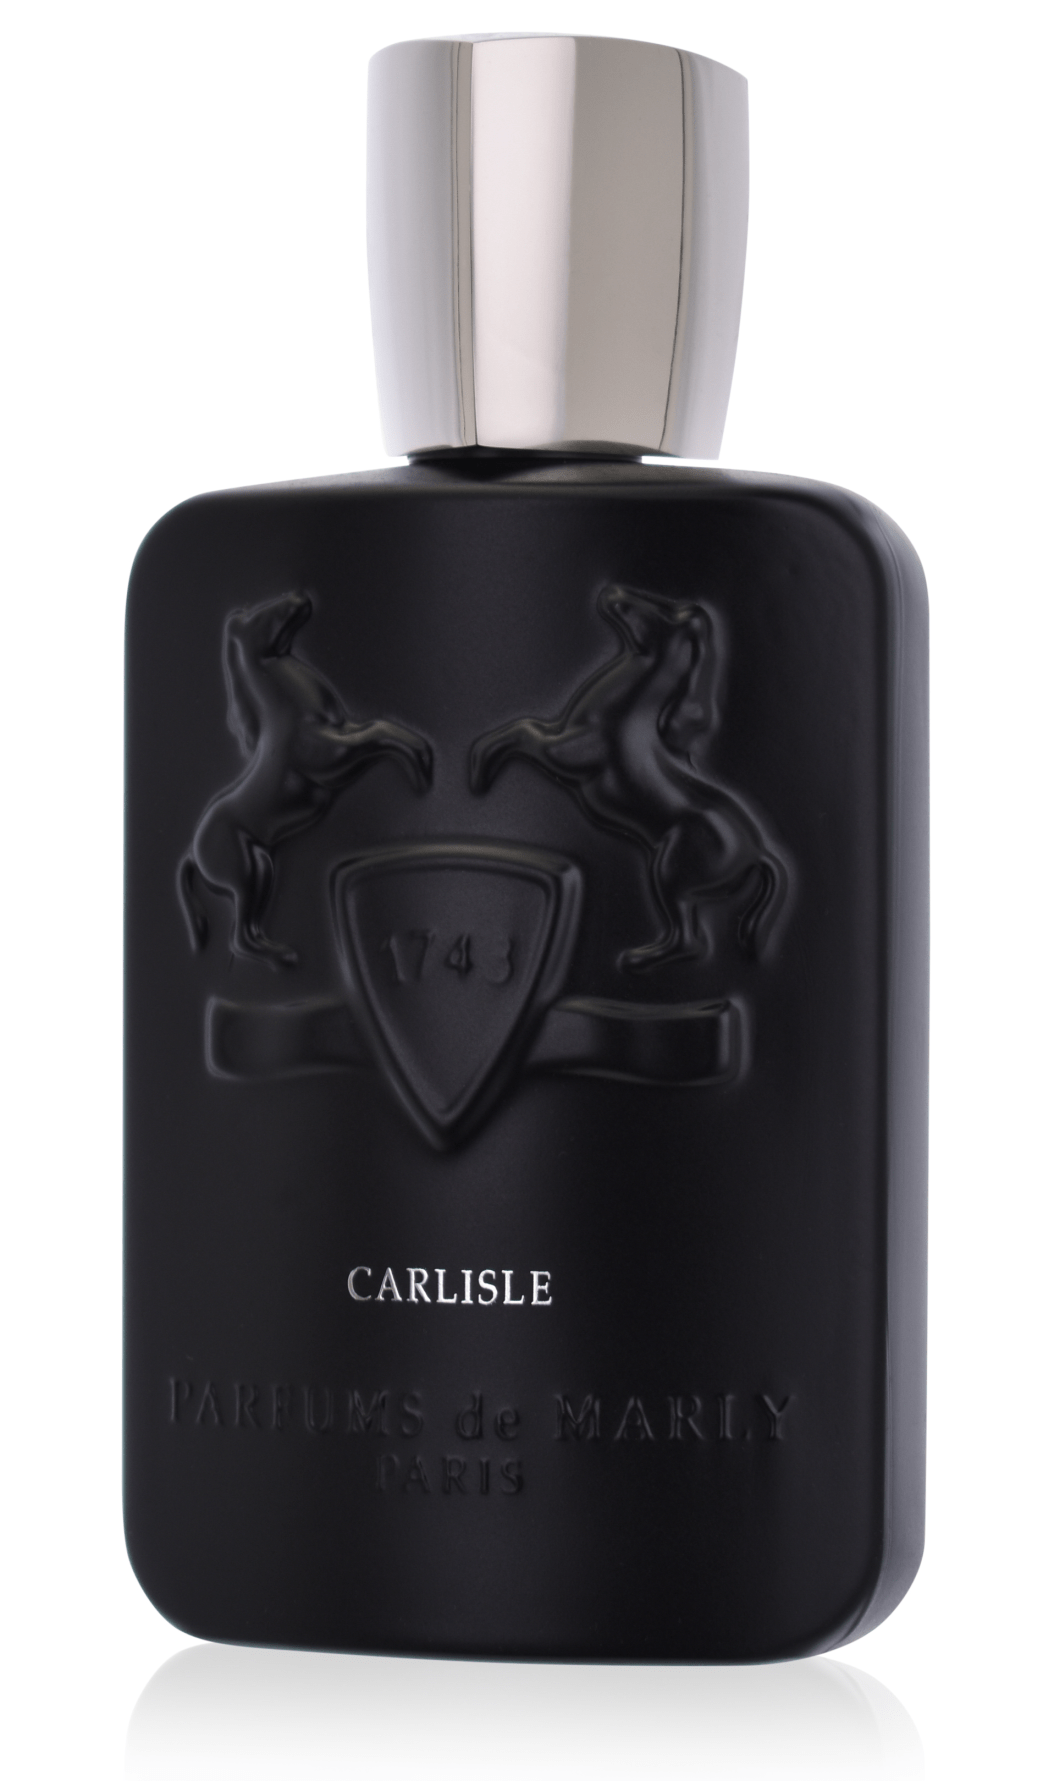 Parfums de Marly Carlisle Eau de Parfum 5 ml Abfüllung